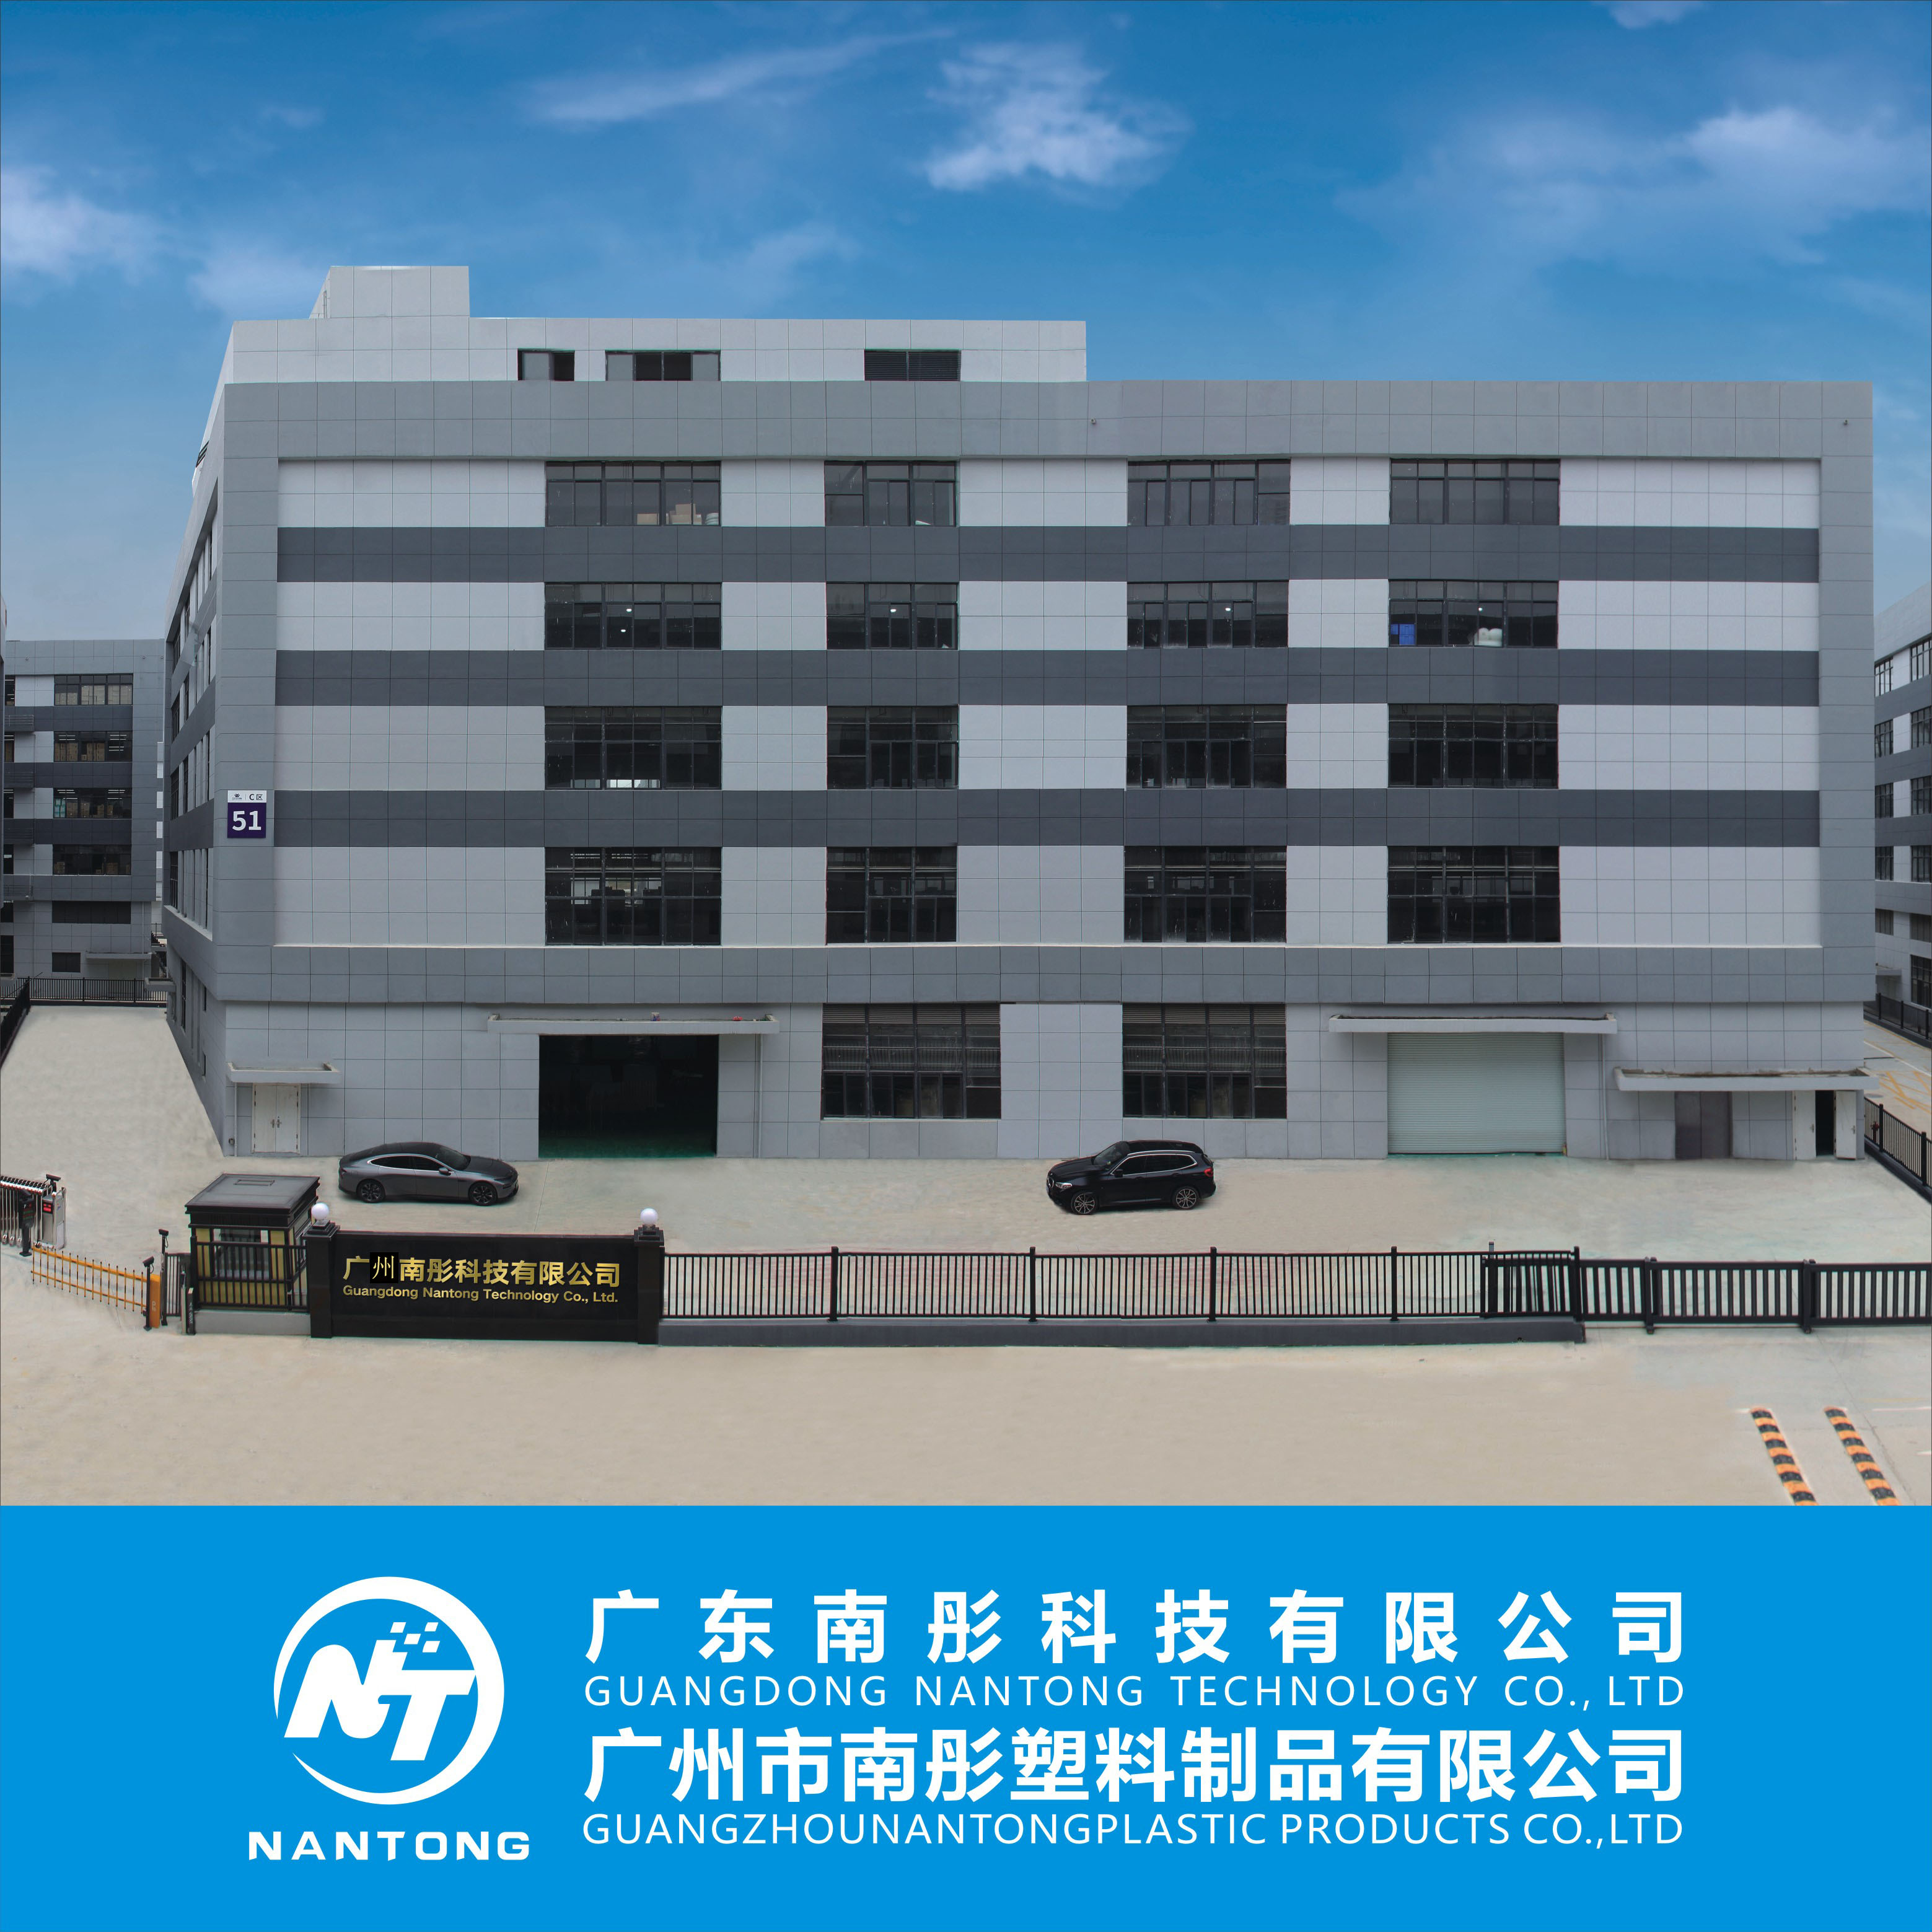 Guangzhou Nantong Plastic Products Co., Ltd.